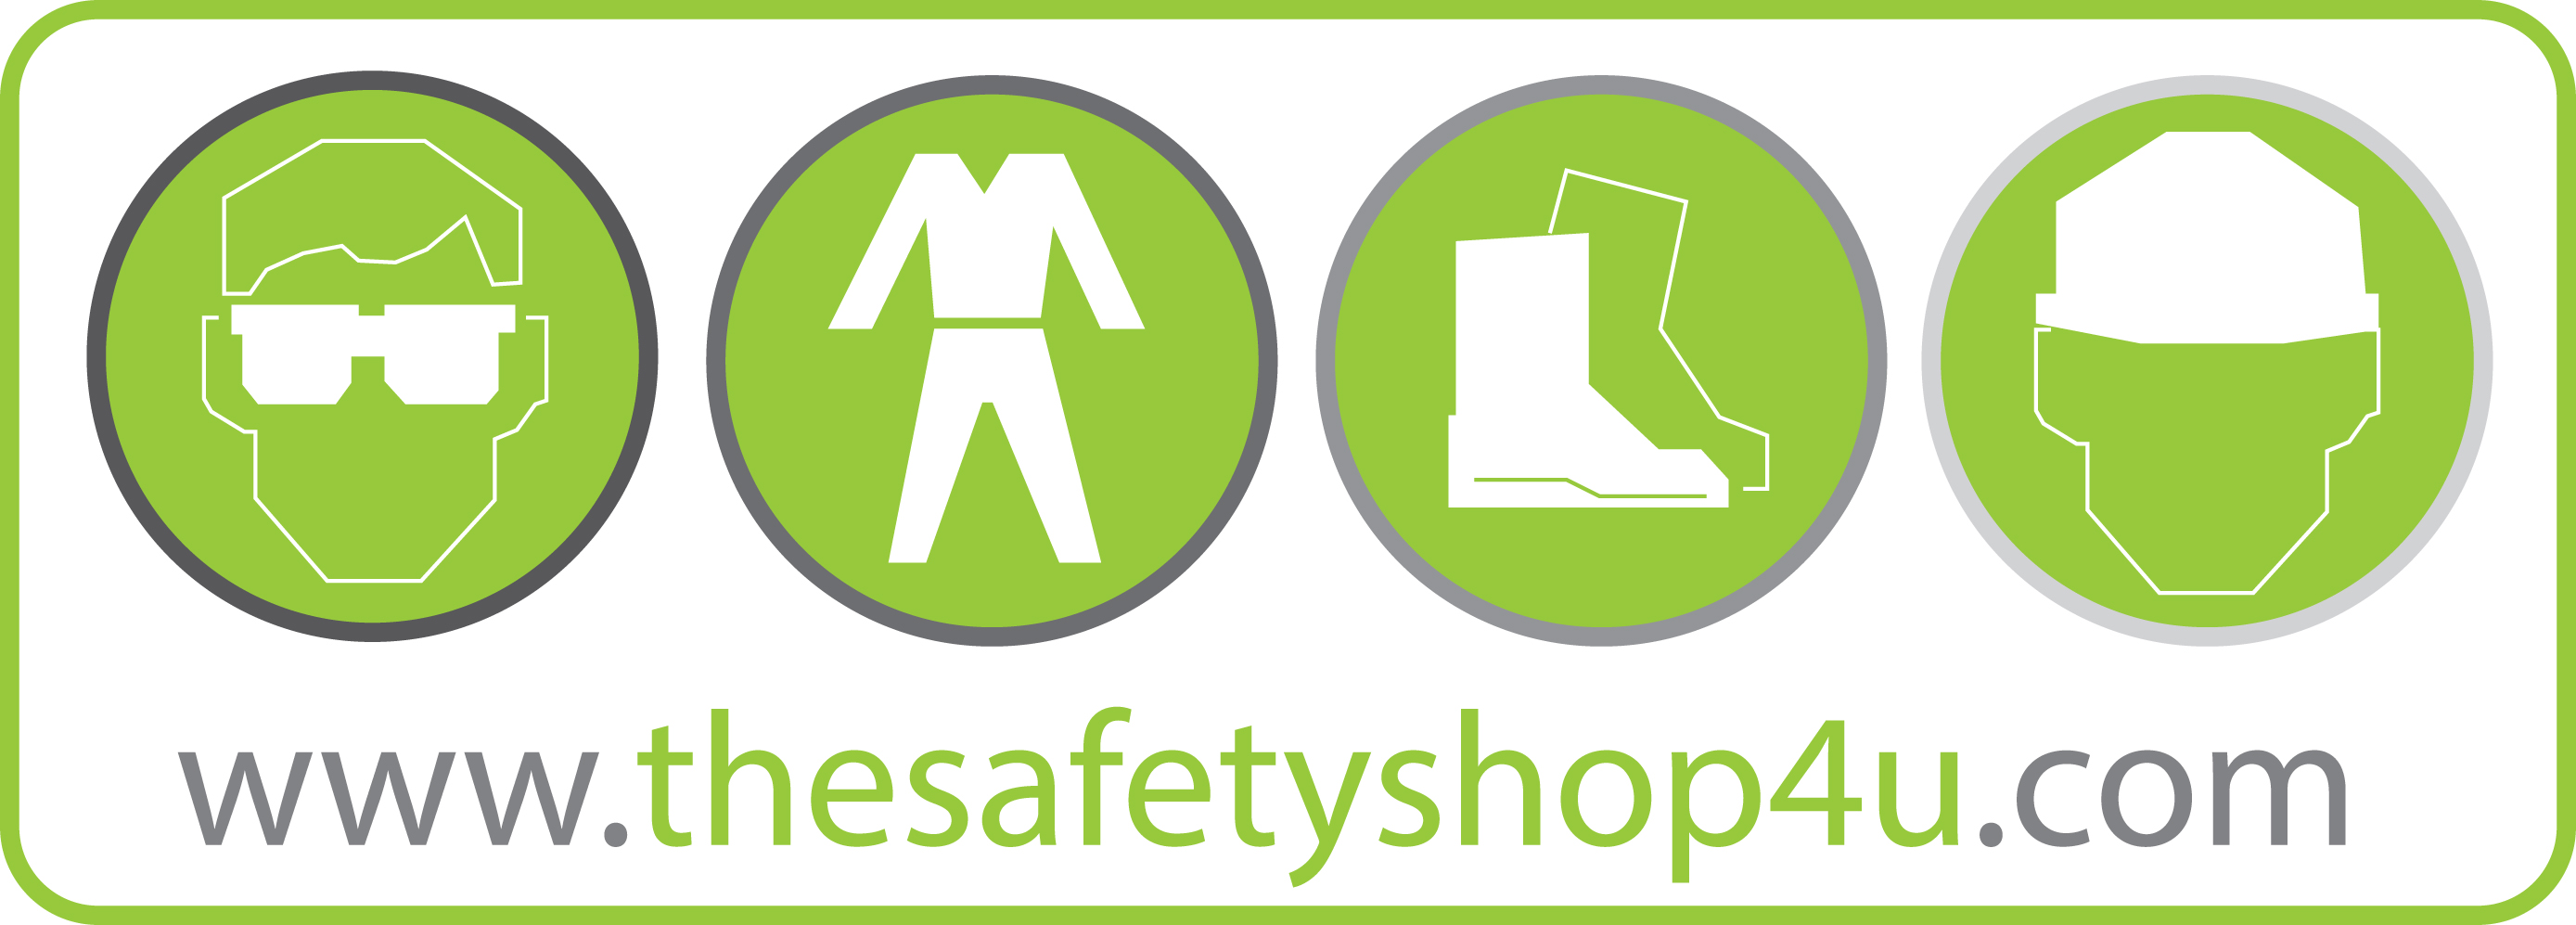 Safety logo (green)